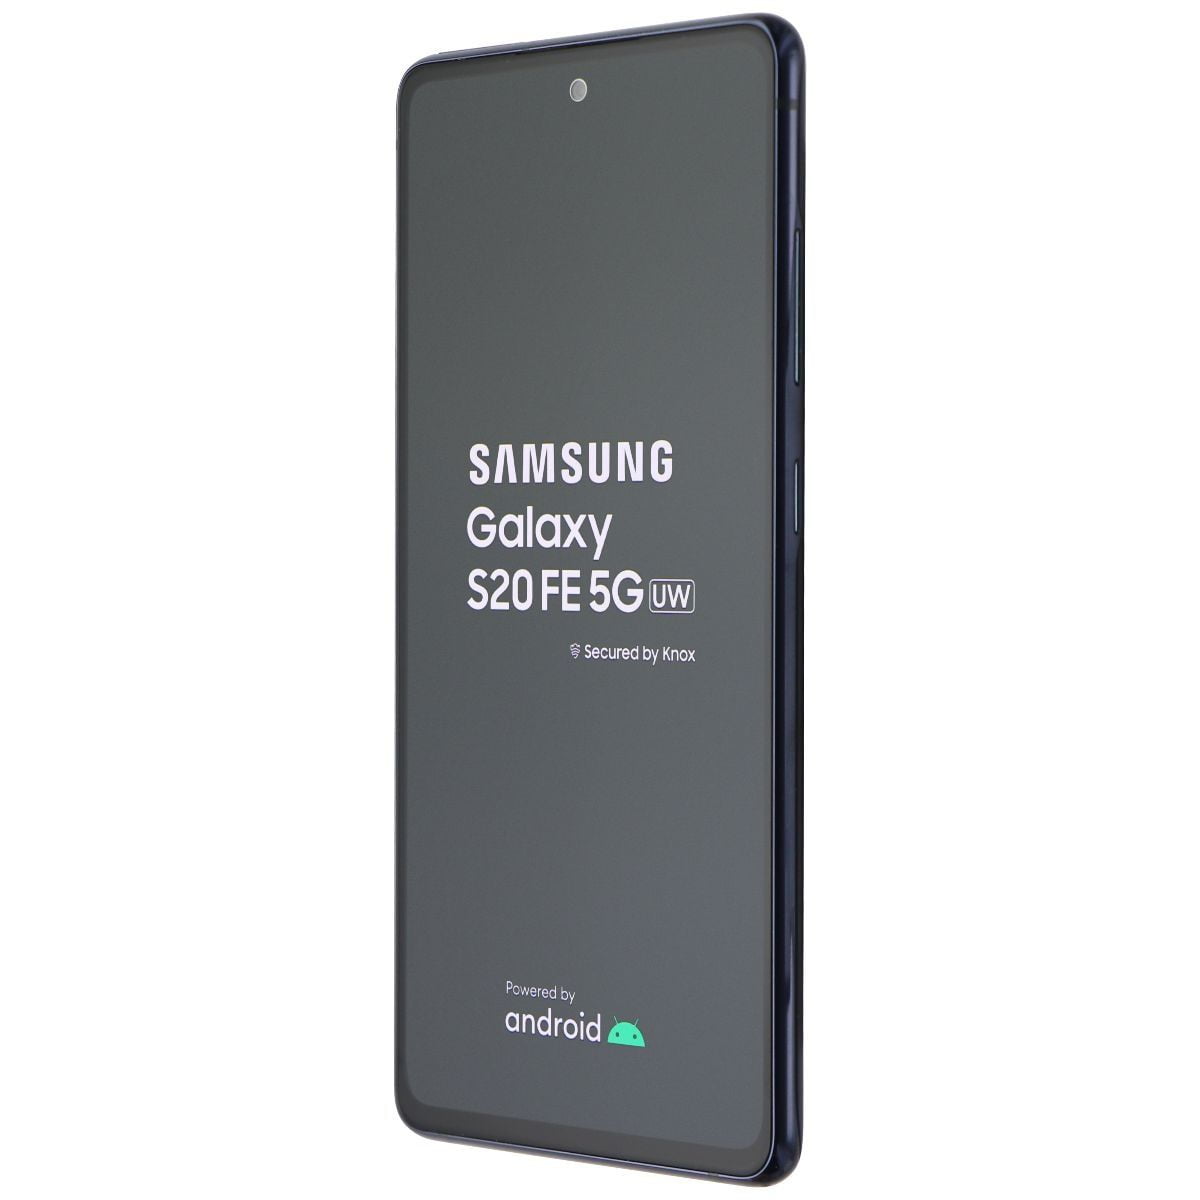 Pre-Owned SAMSUNG Galaxy S20 FE 5G G781 128GB, Navy Smartphone for Verizon  Wireless (Refurbished: Good) 